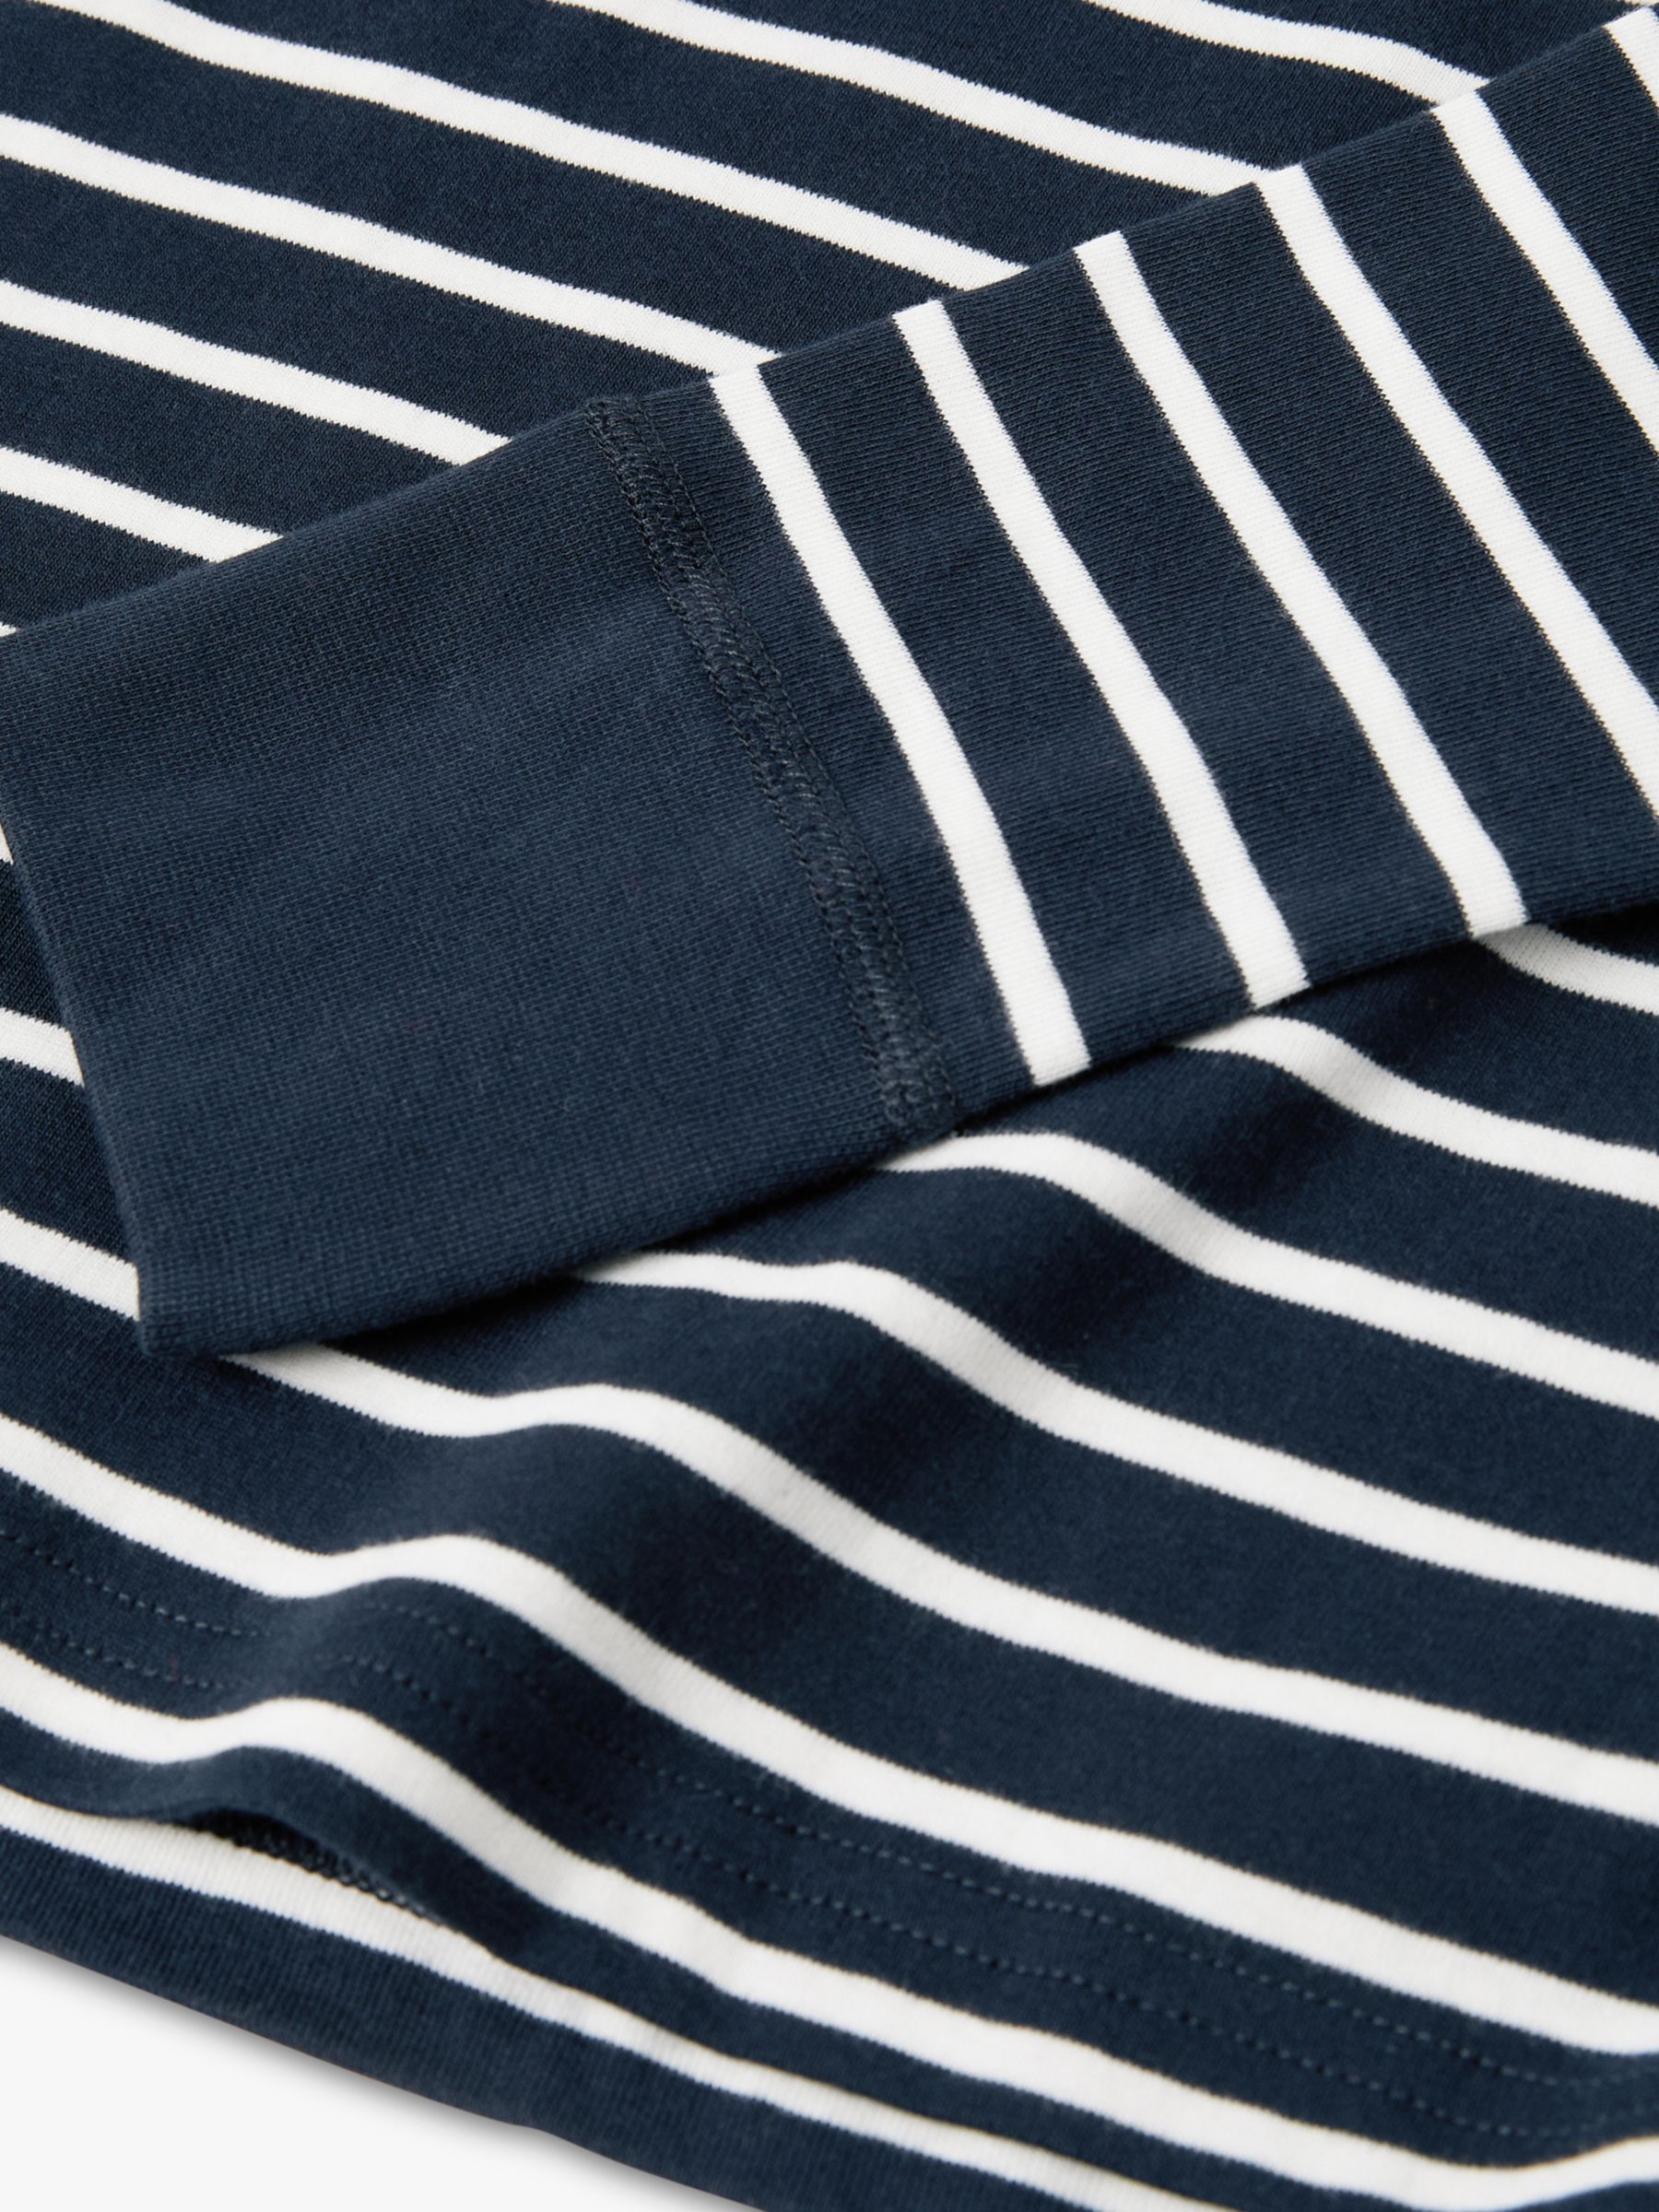 Polarn O. Pyret Kids' Organic Cotton Stripe Long Sleeve T-Shirt, Blue ...